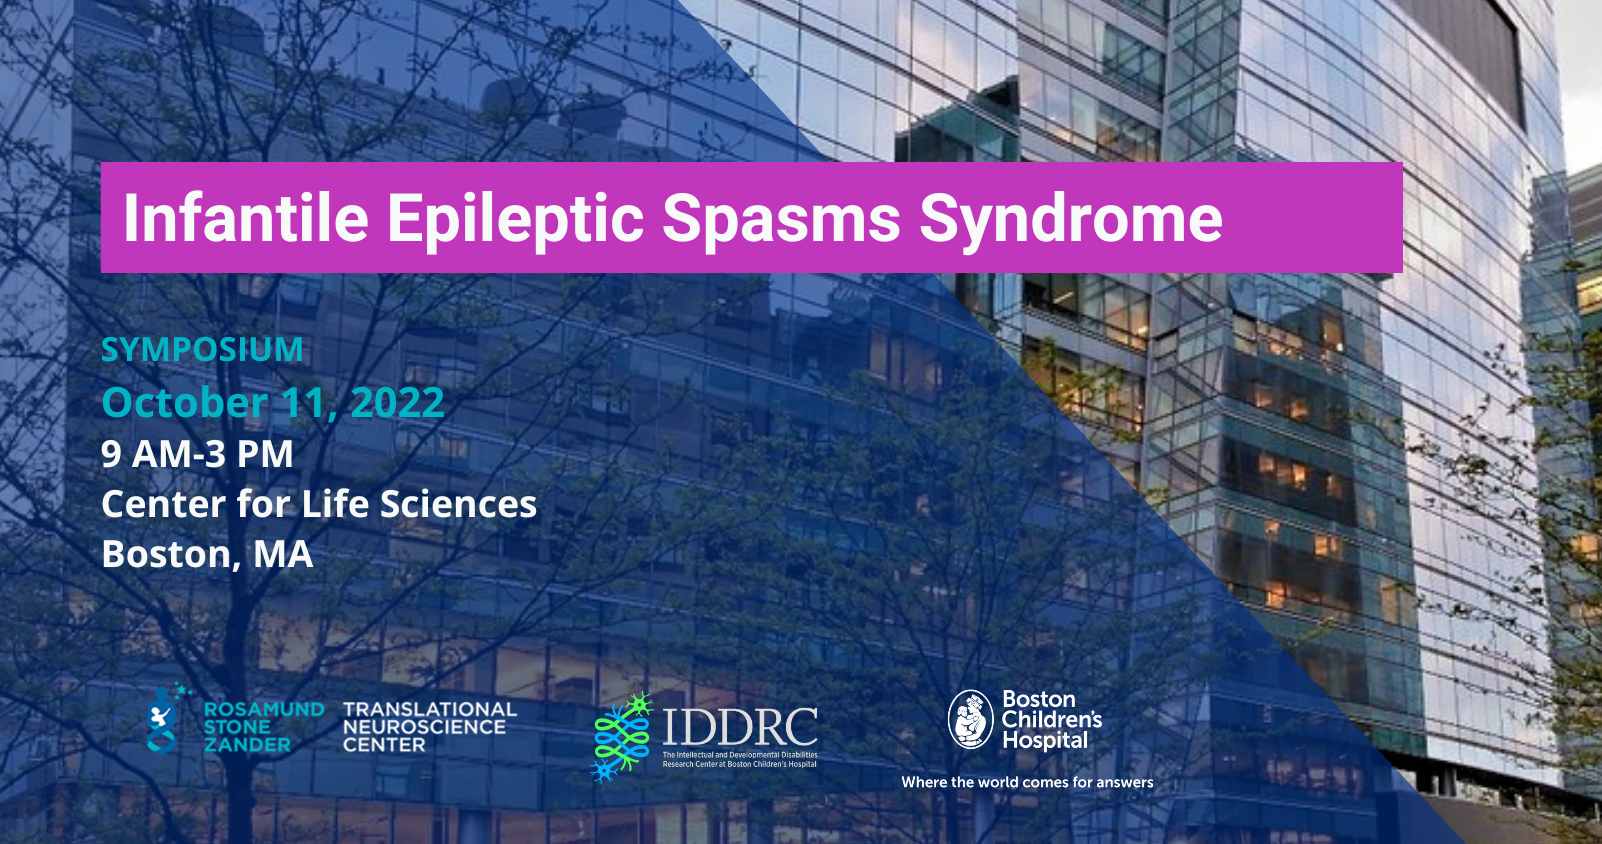 Infantile Epileptic Spasms Syndrome. Symposium. October 11, 2022. Center for Life Sciences, Boston, MA.